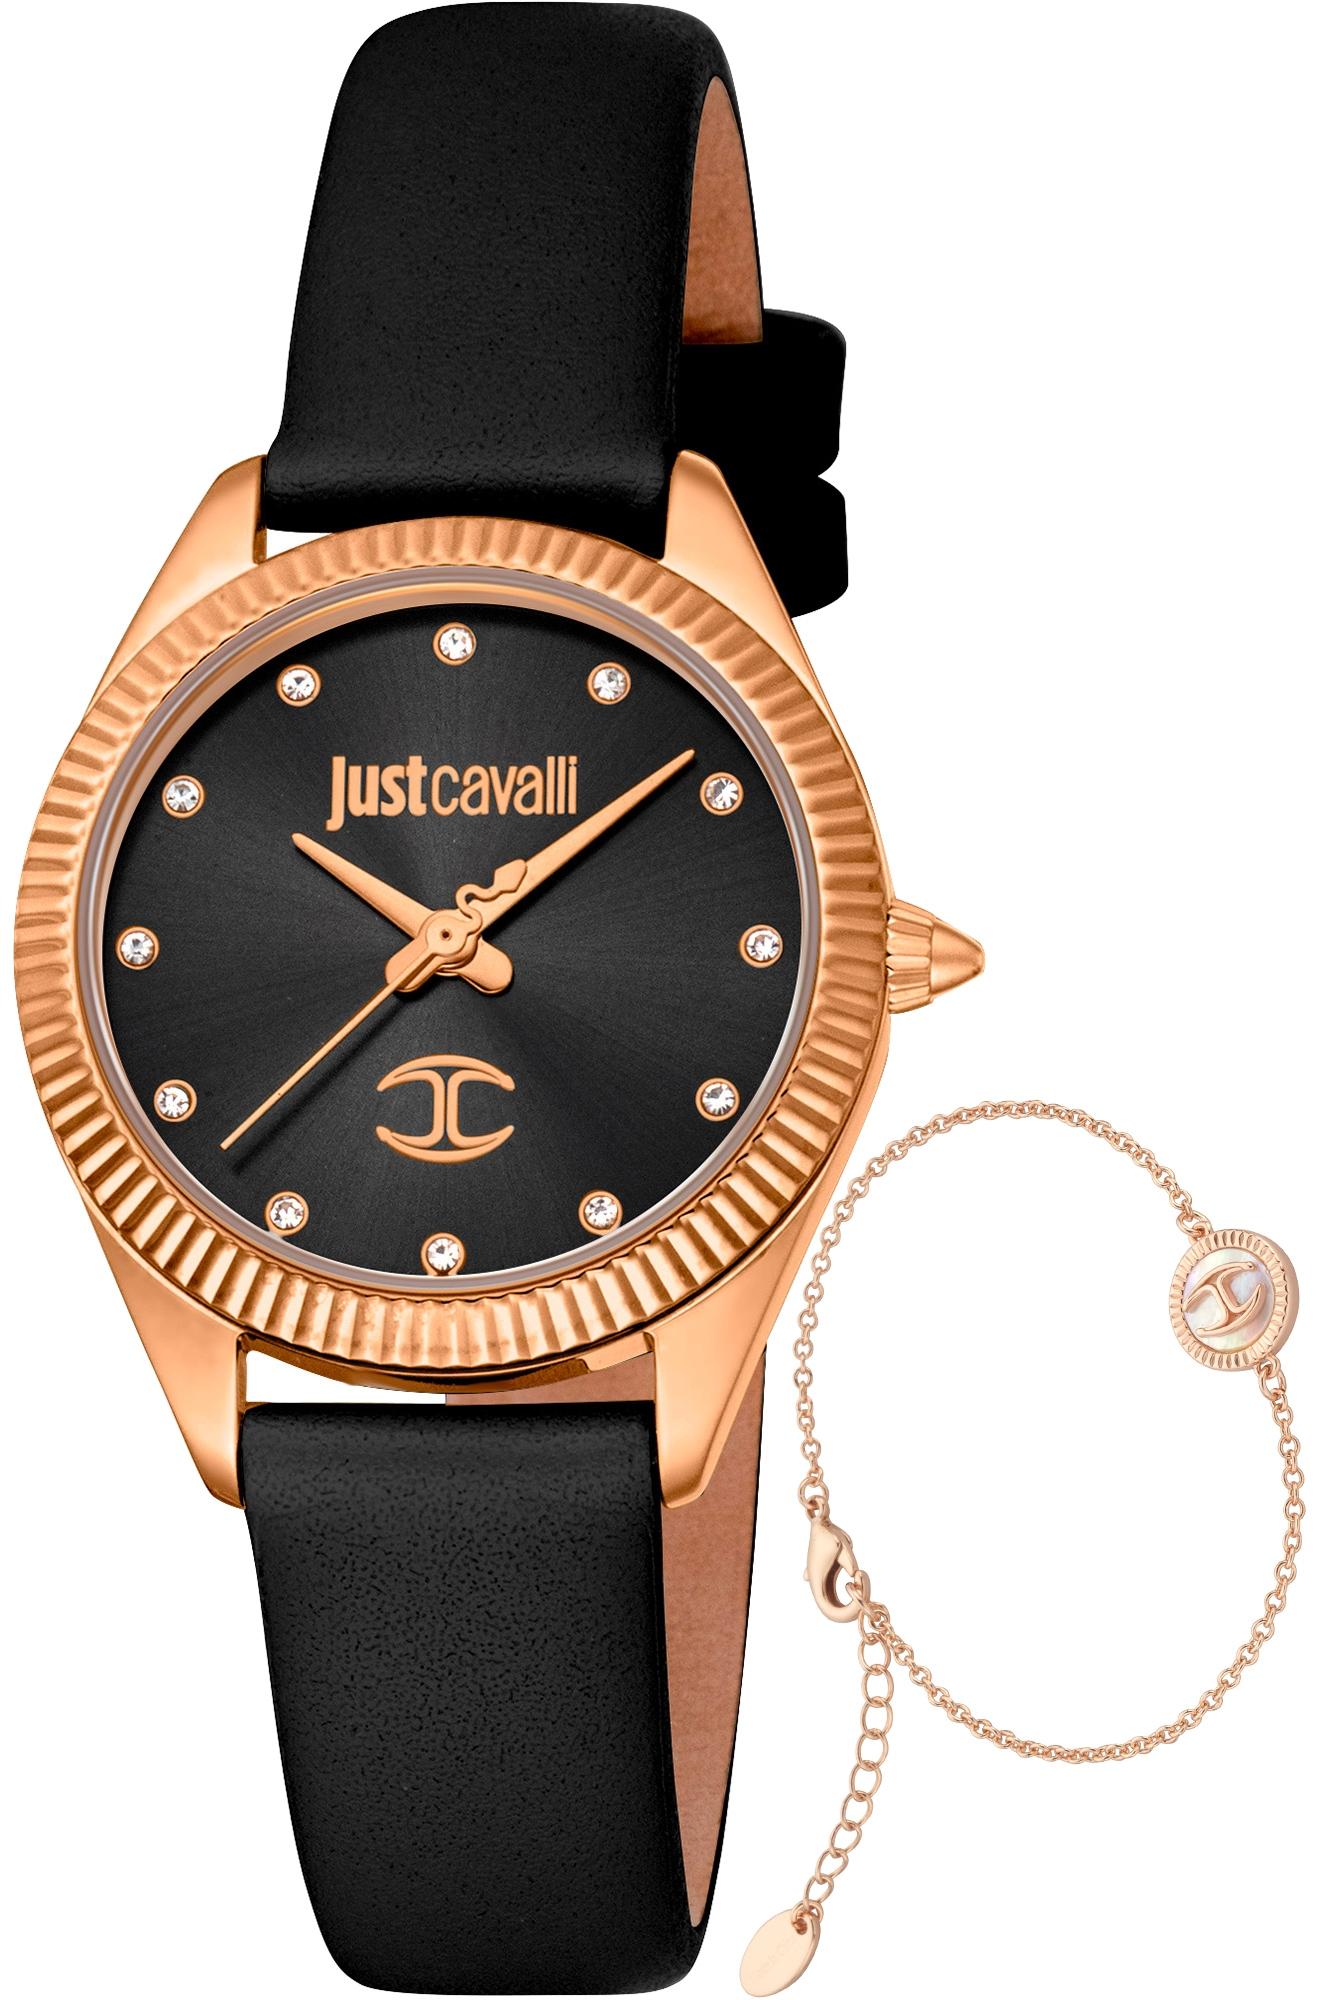 JUST CAVALLI Ladies Gift Set - JC1L267L0035, Rose Gold case with Black Leather Strap